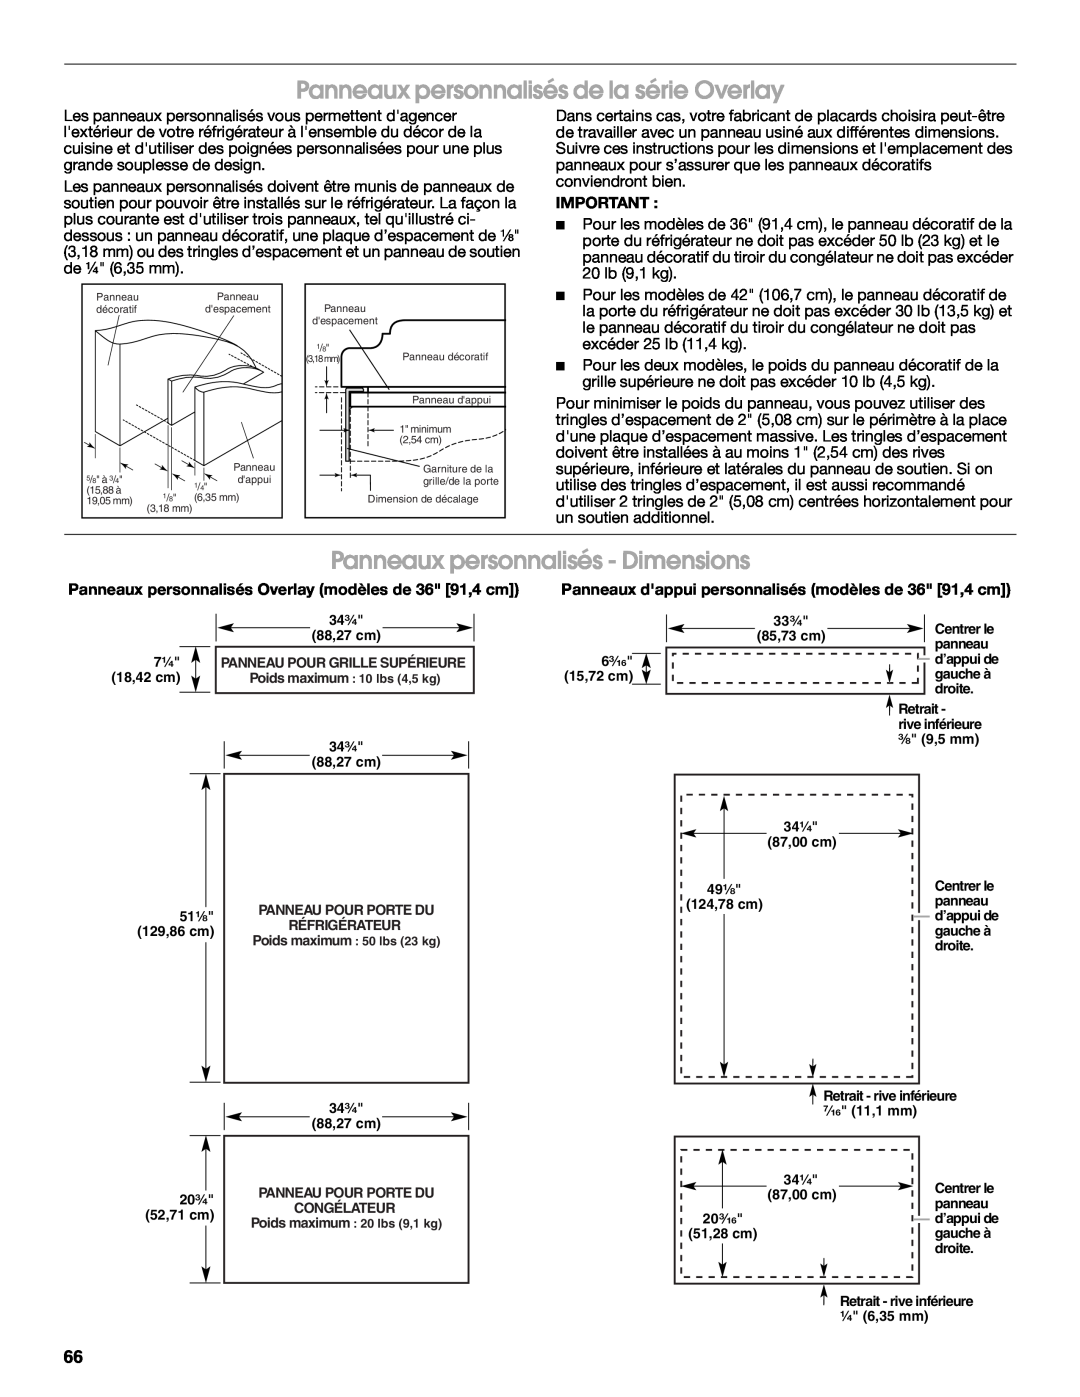 Jenn-Air W10183782A manual Panneaux personnalisés de la série Overlay, Panneaux personnalisés - Dimensions 